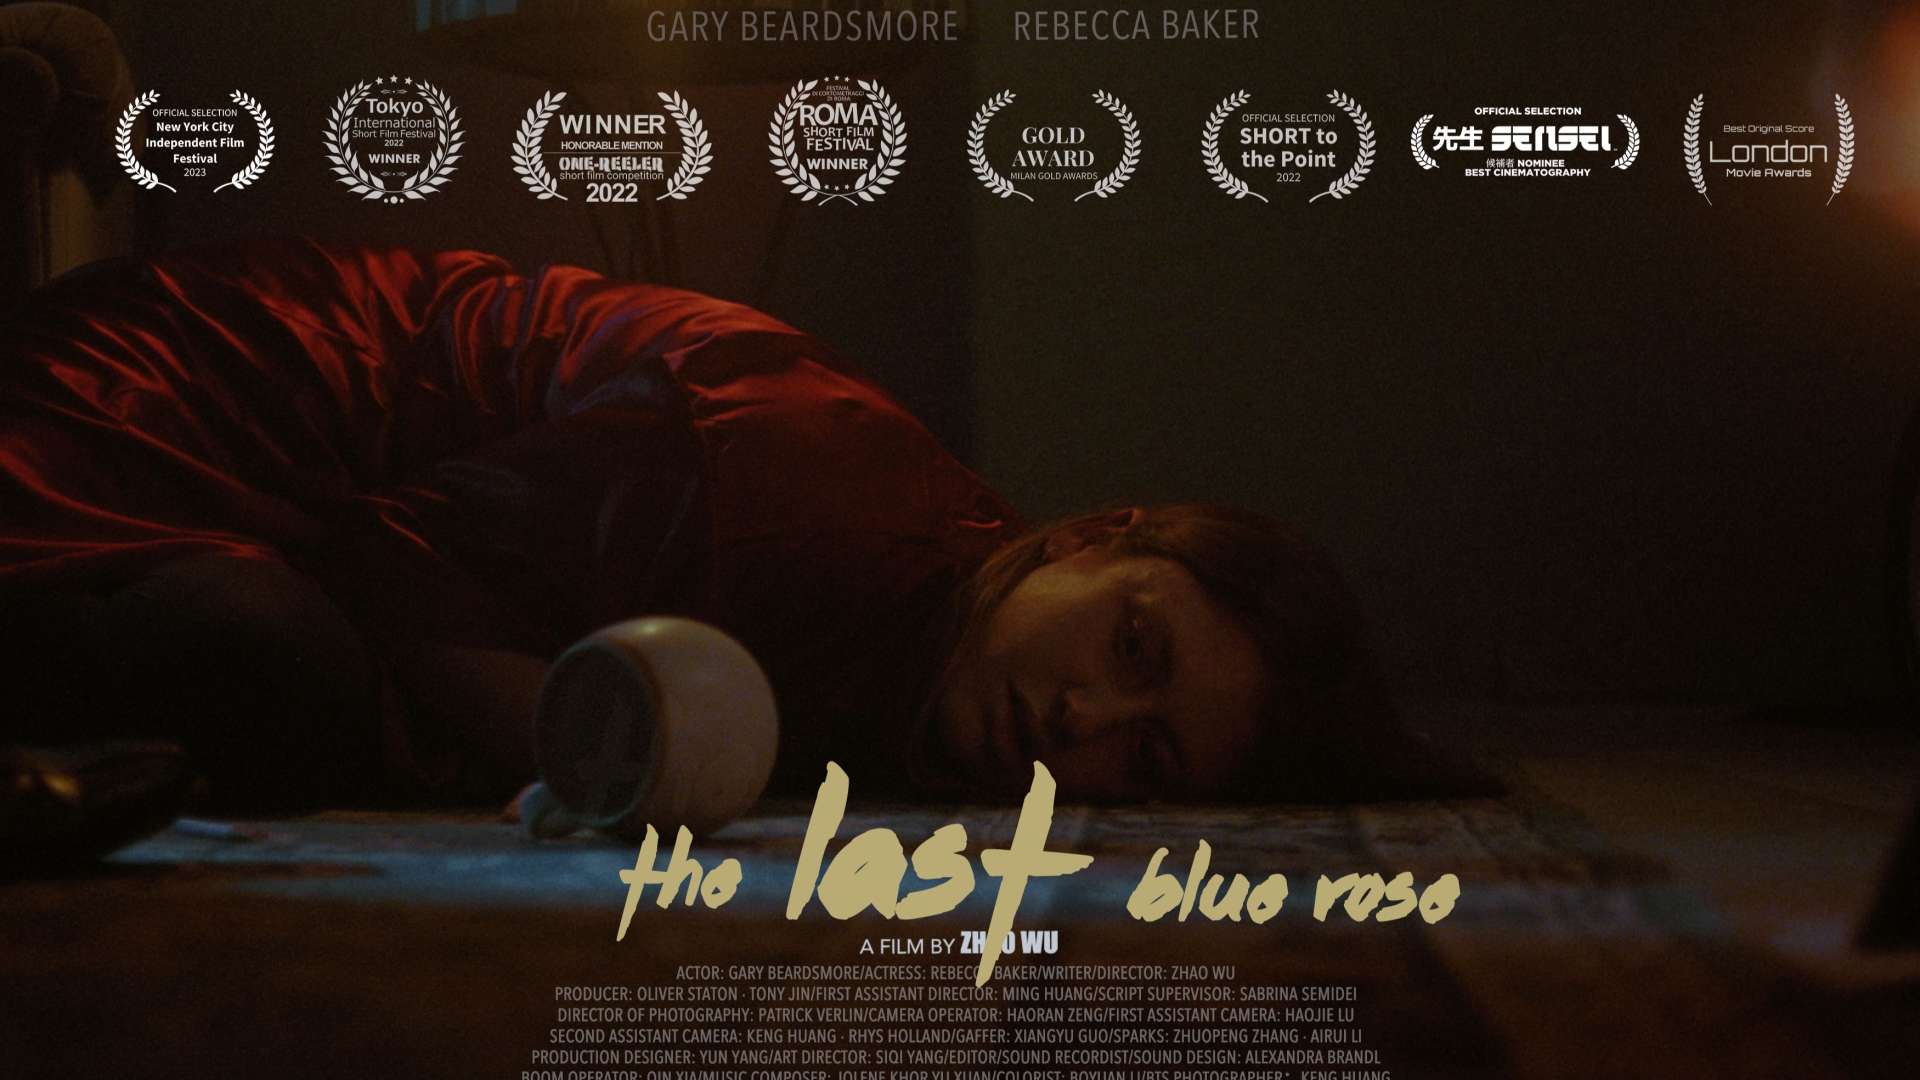 The Last Blue Rose 35毫米胶片悬疑超短片